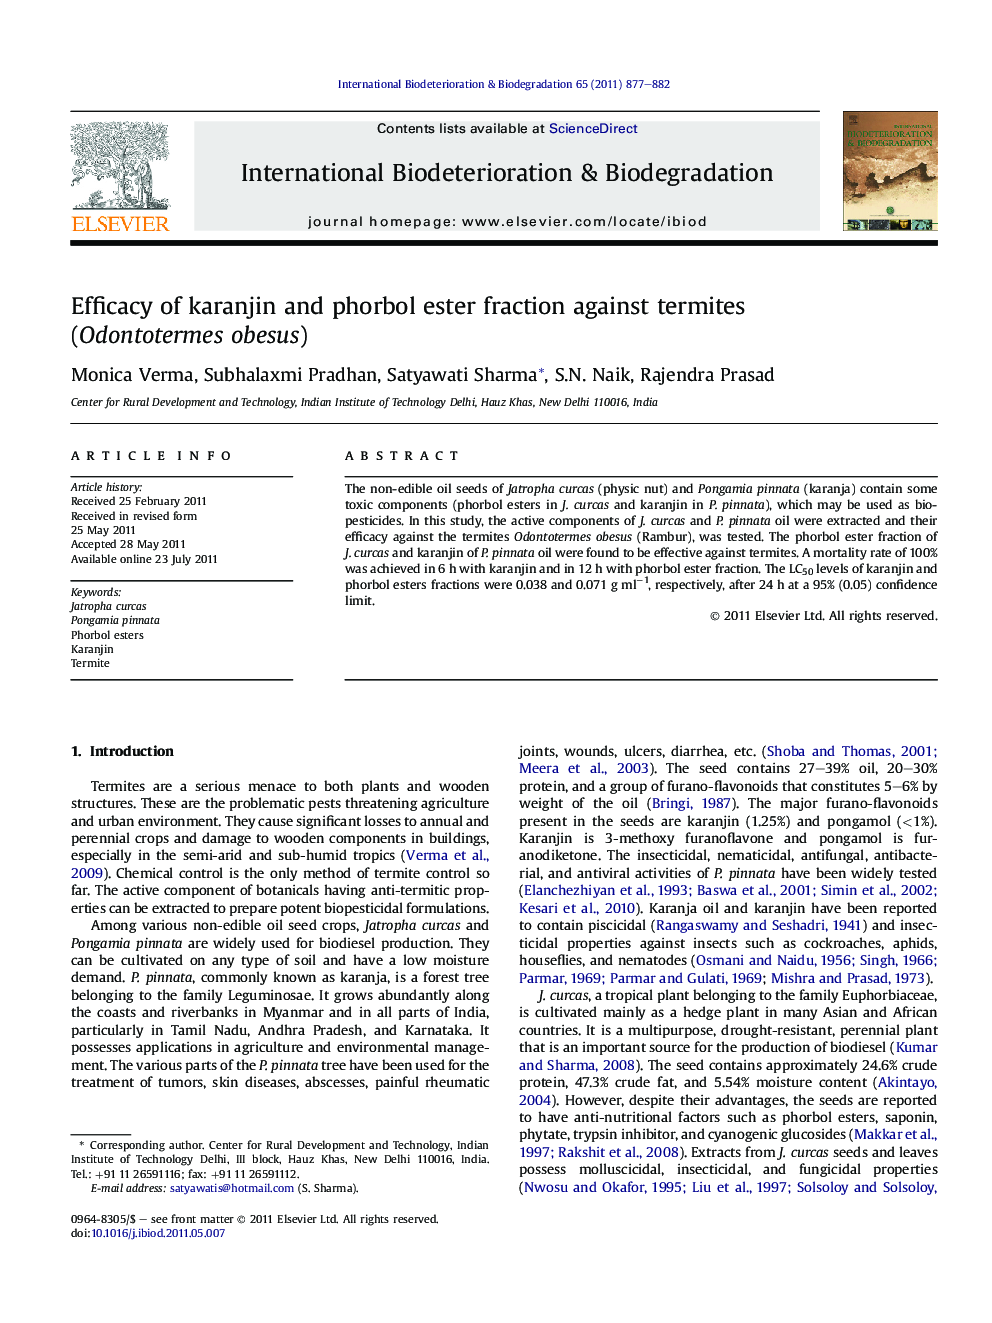 Efficacy of karanjin and phorbol ester fraction against termites (Odontotermes obesus)